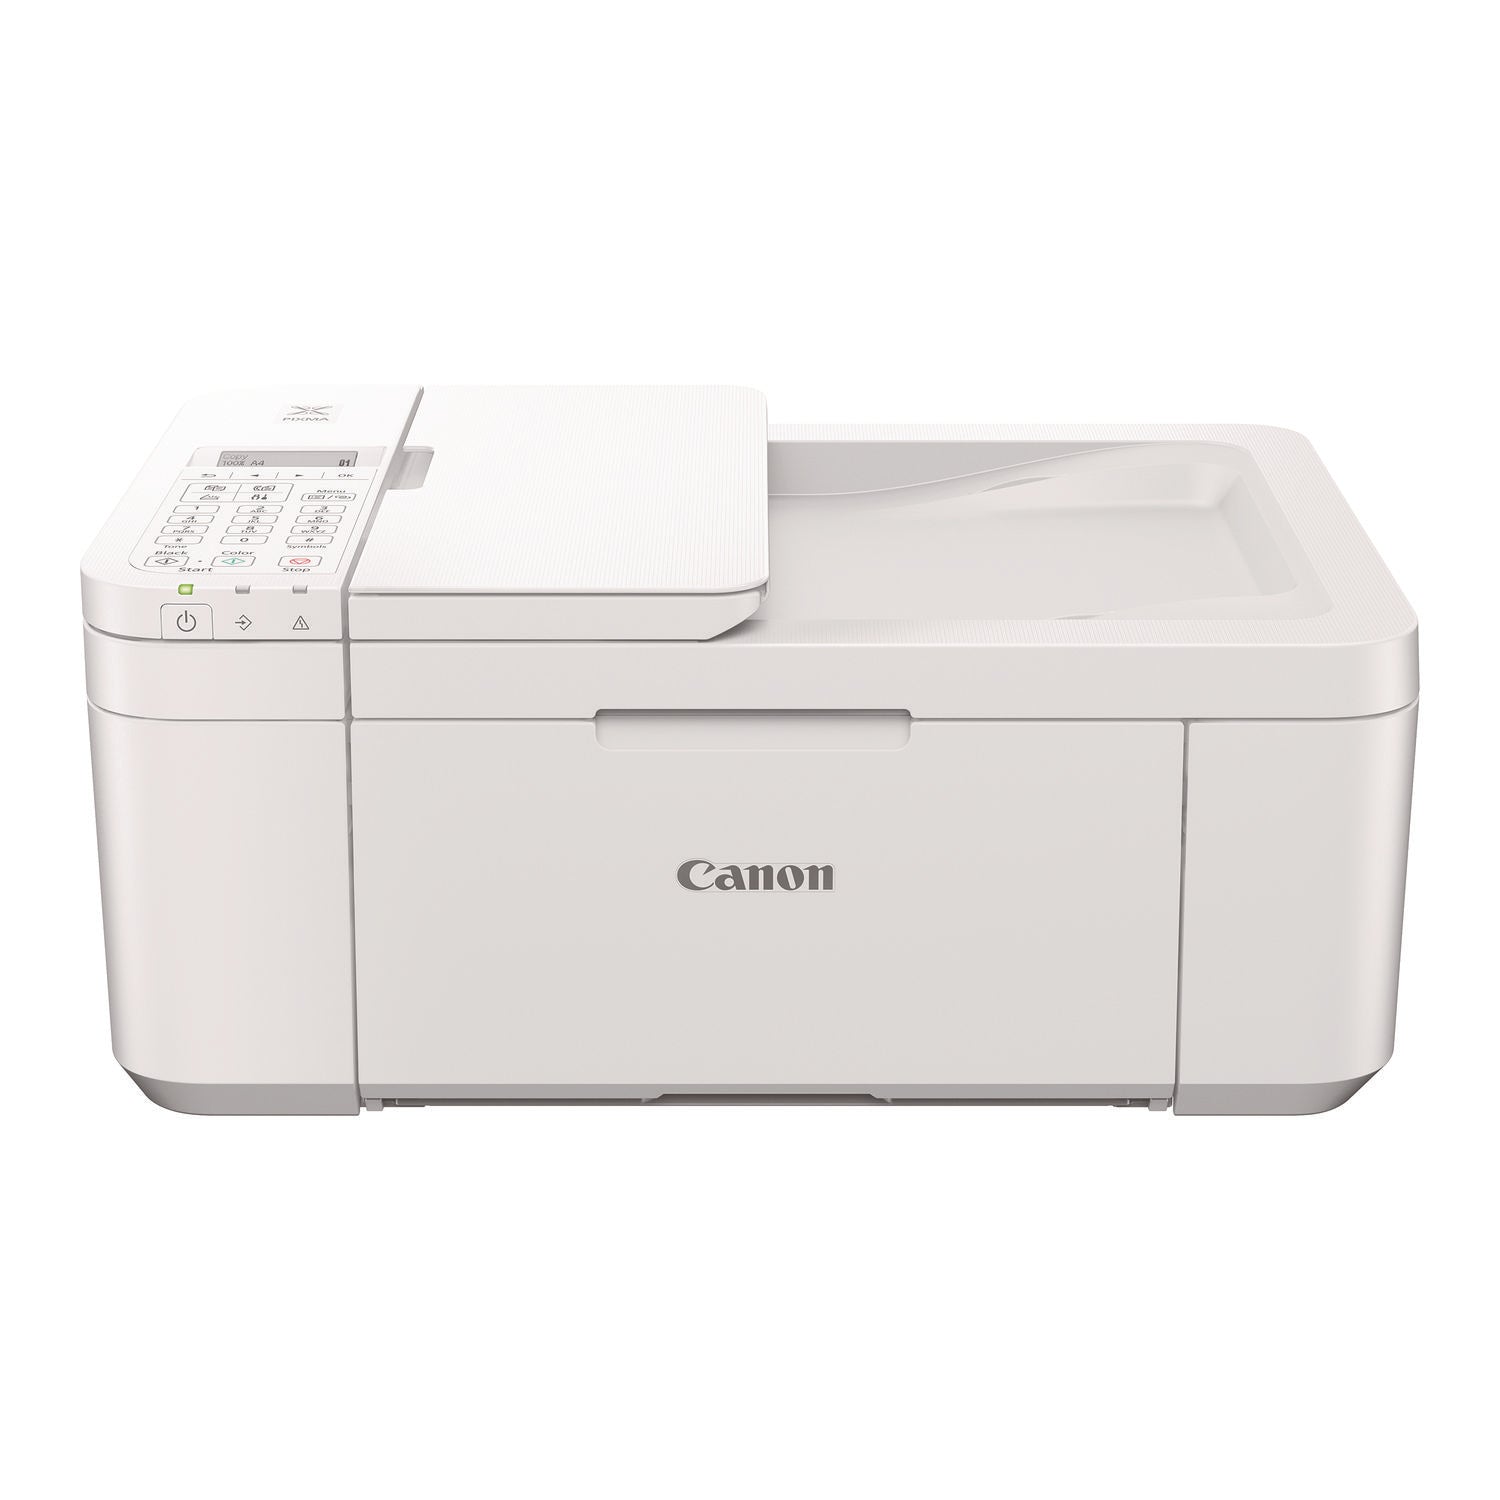 pixma-tr4720-wireless-all-in-one-printer-copy-fax-print-scan_cnm5074c022 - 1